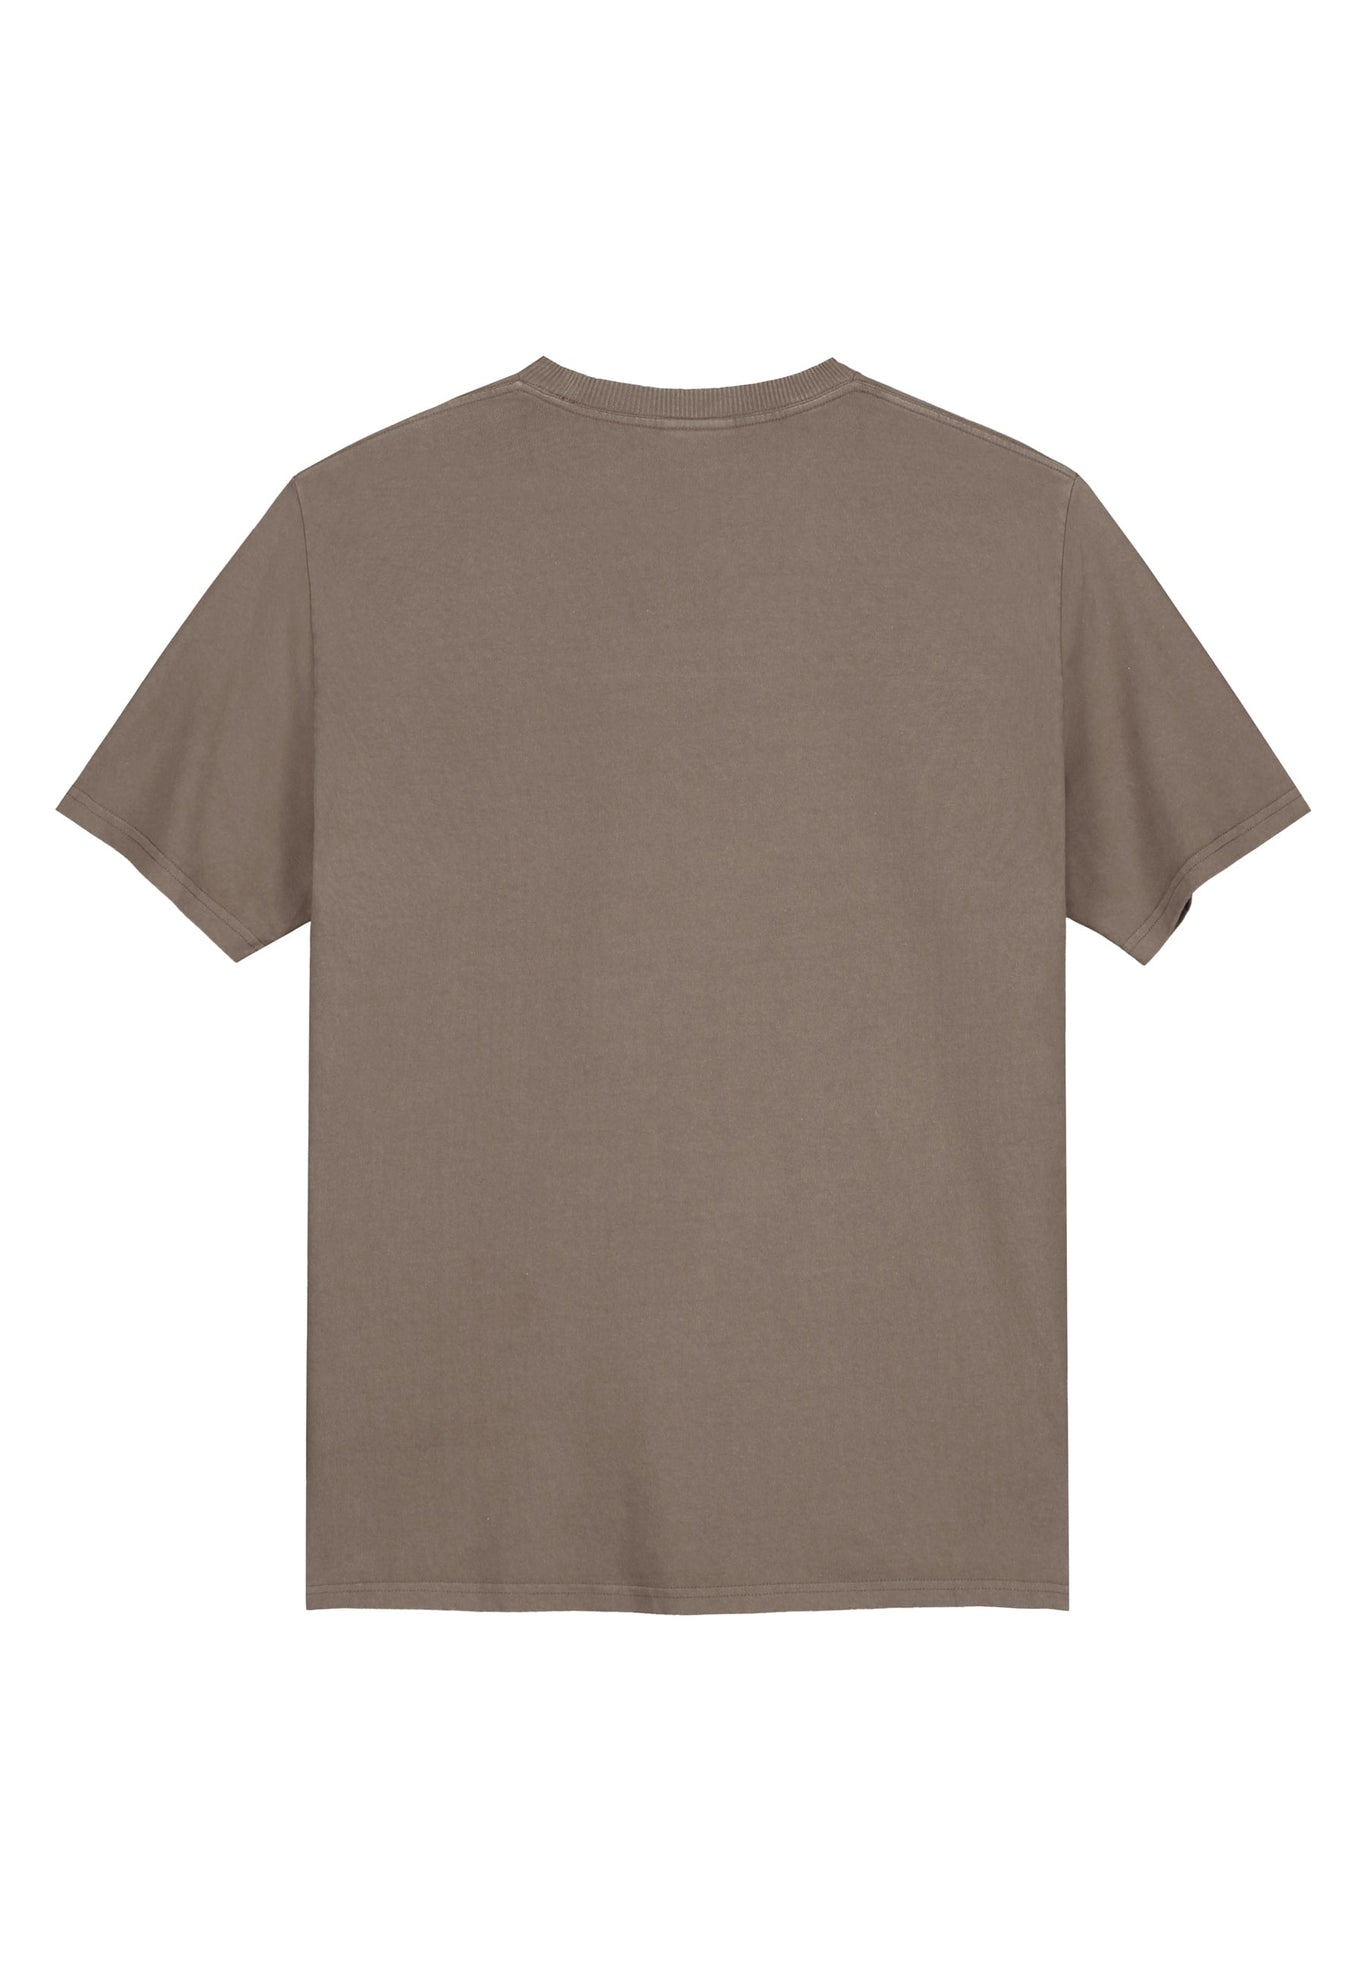 Full Circle Circular T-Shirt Brown